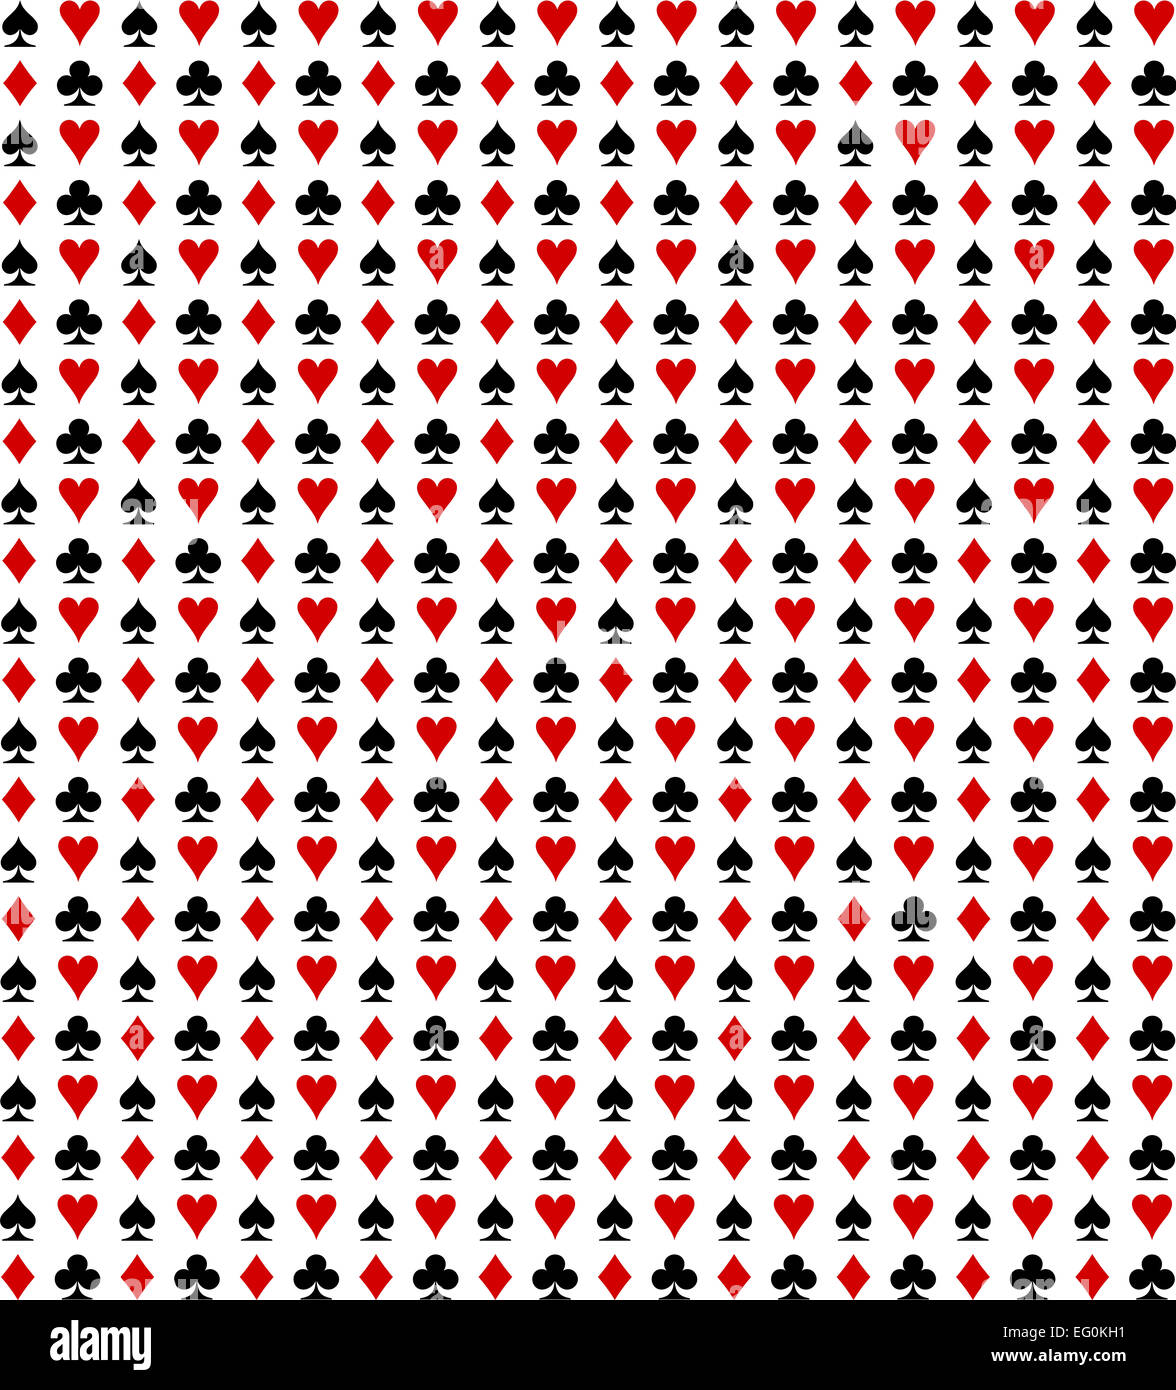 casino game poker cards symbol pattern texture Stock Photo